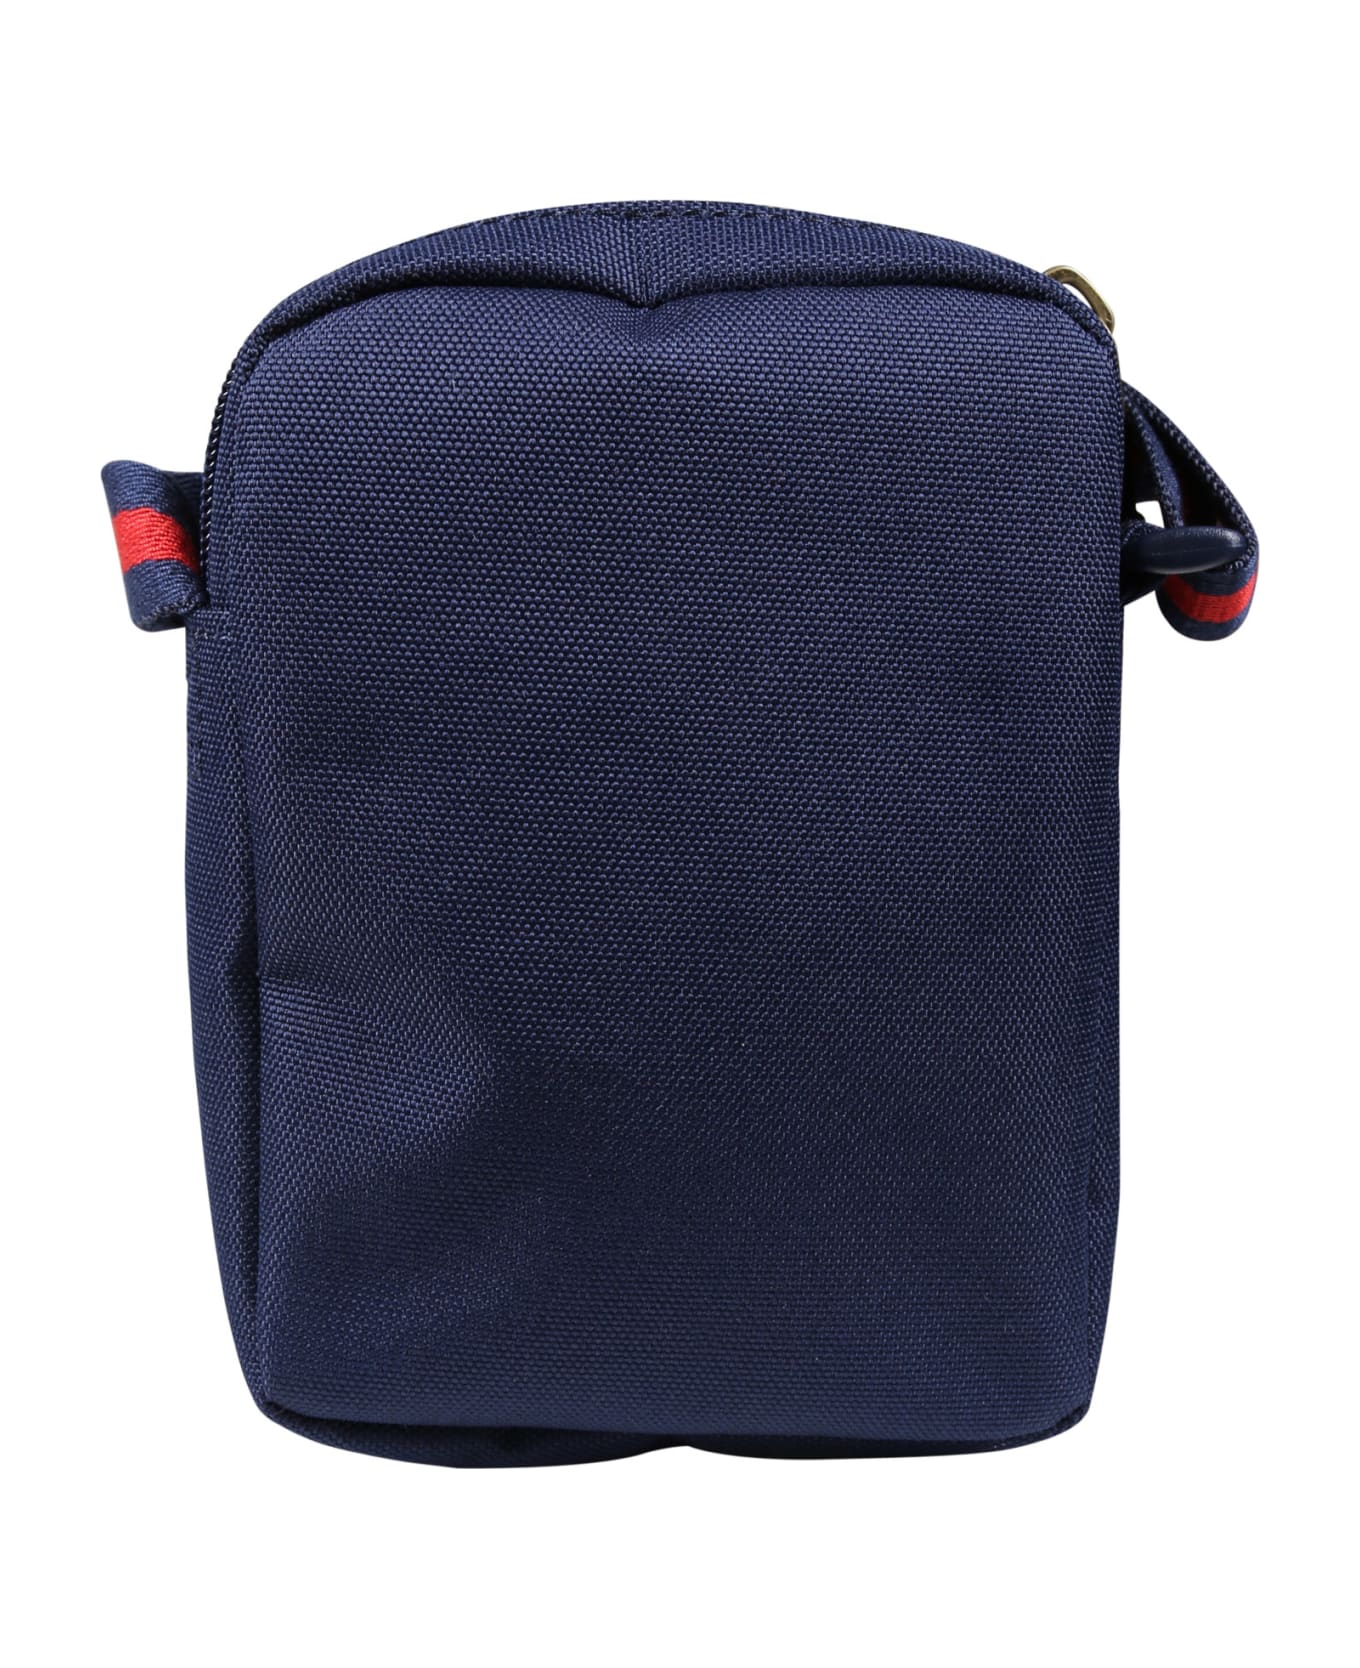 Ralph Lauren Blue Bag For Girl With Logo - Blue